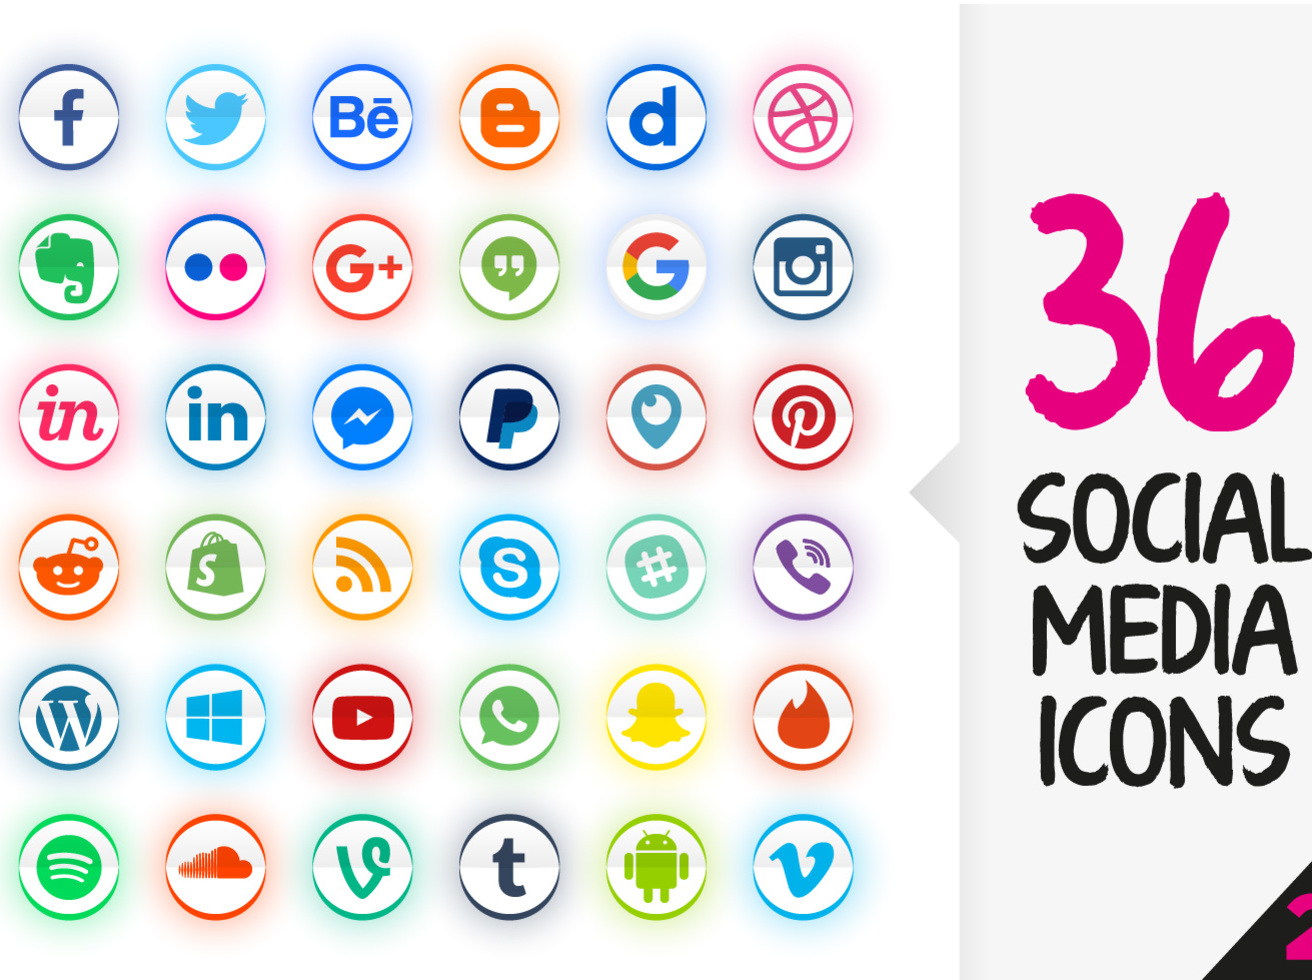 Social Media Icons Pack Free Vector Art & Graphics | freevector.com